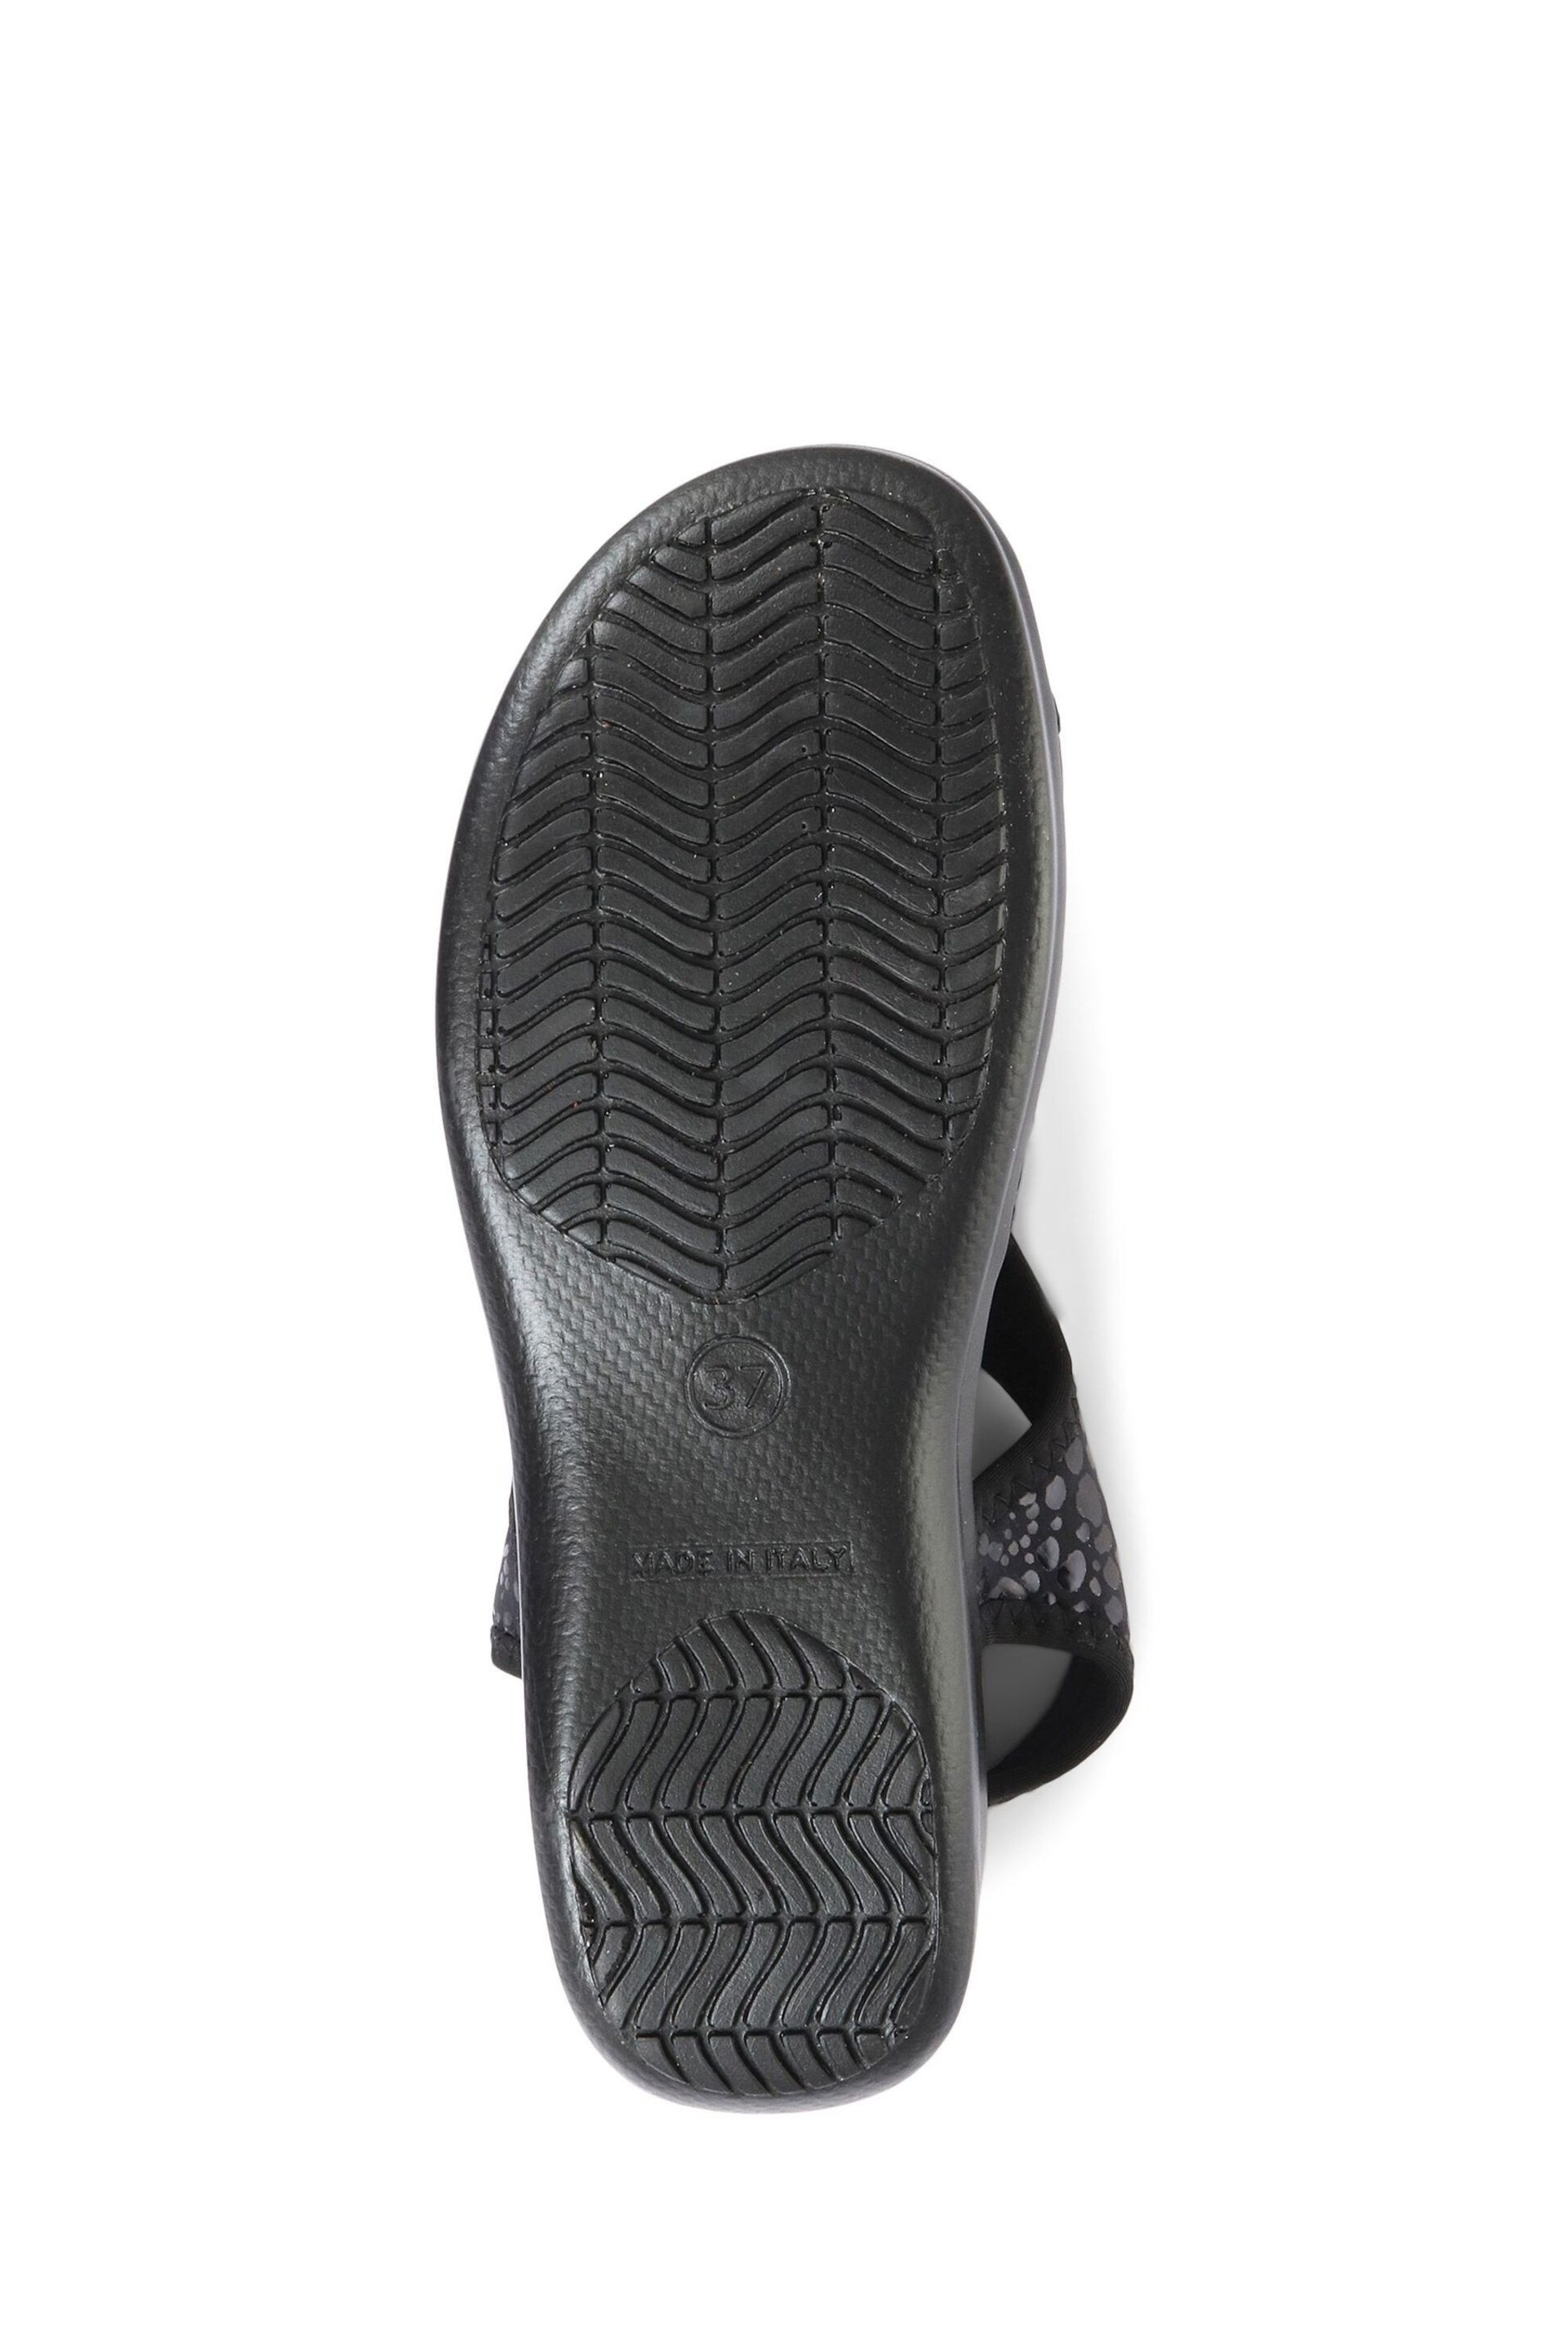 Pavers Pull-On Black Sandals - Image 6 of 7